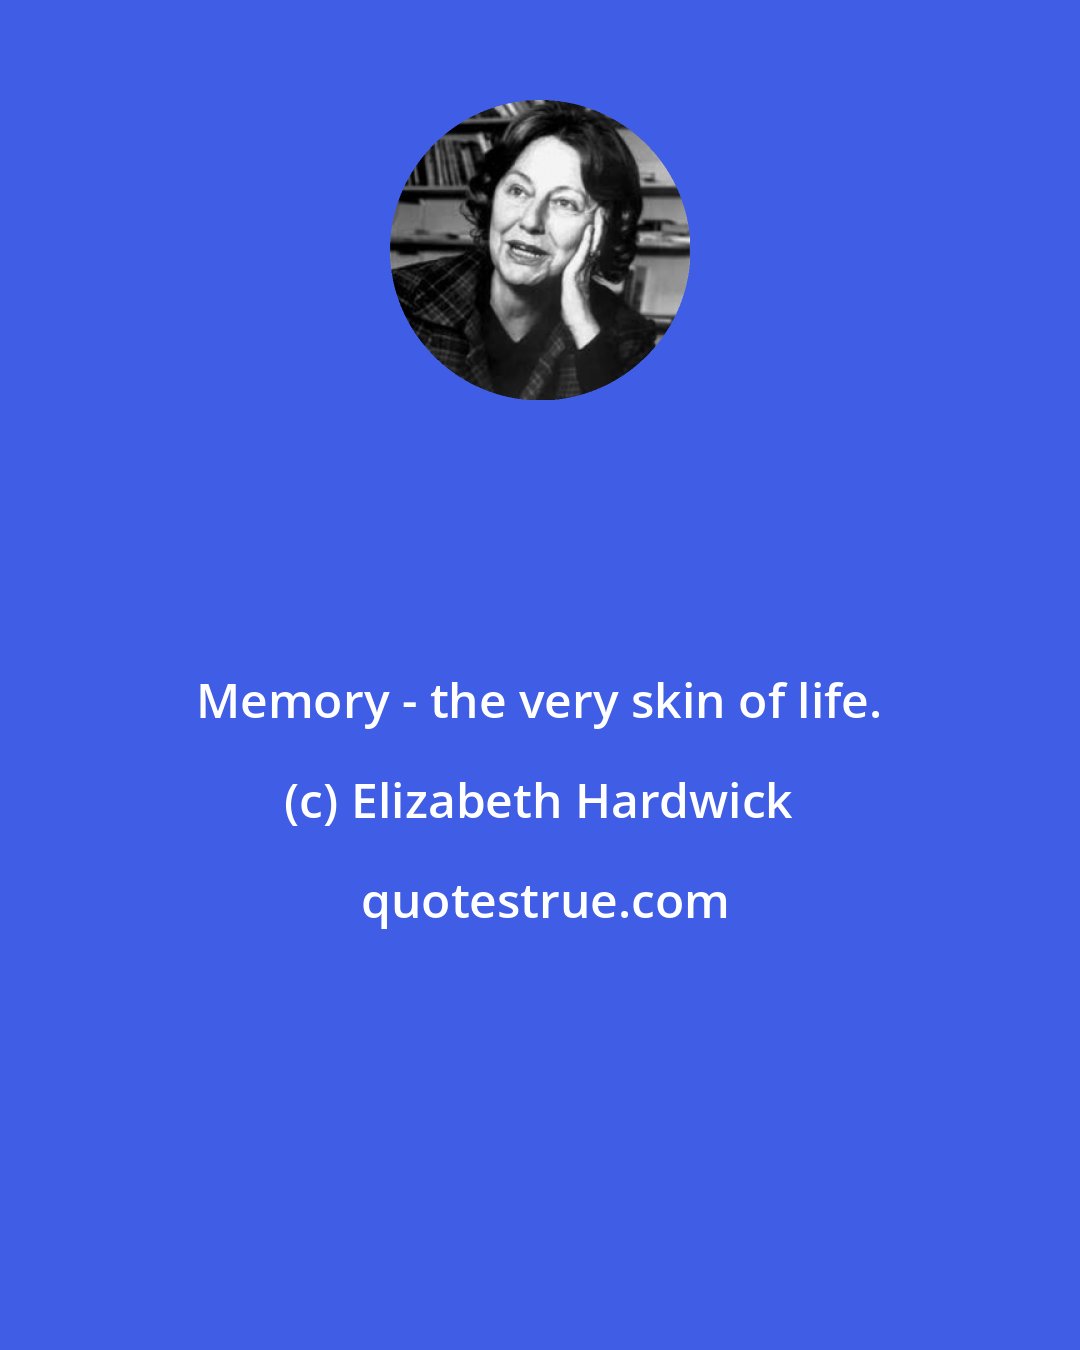 Elizabeth Hardwick: Memory - the very skin of life.